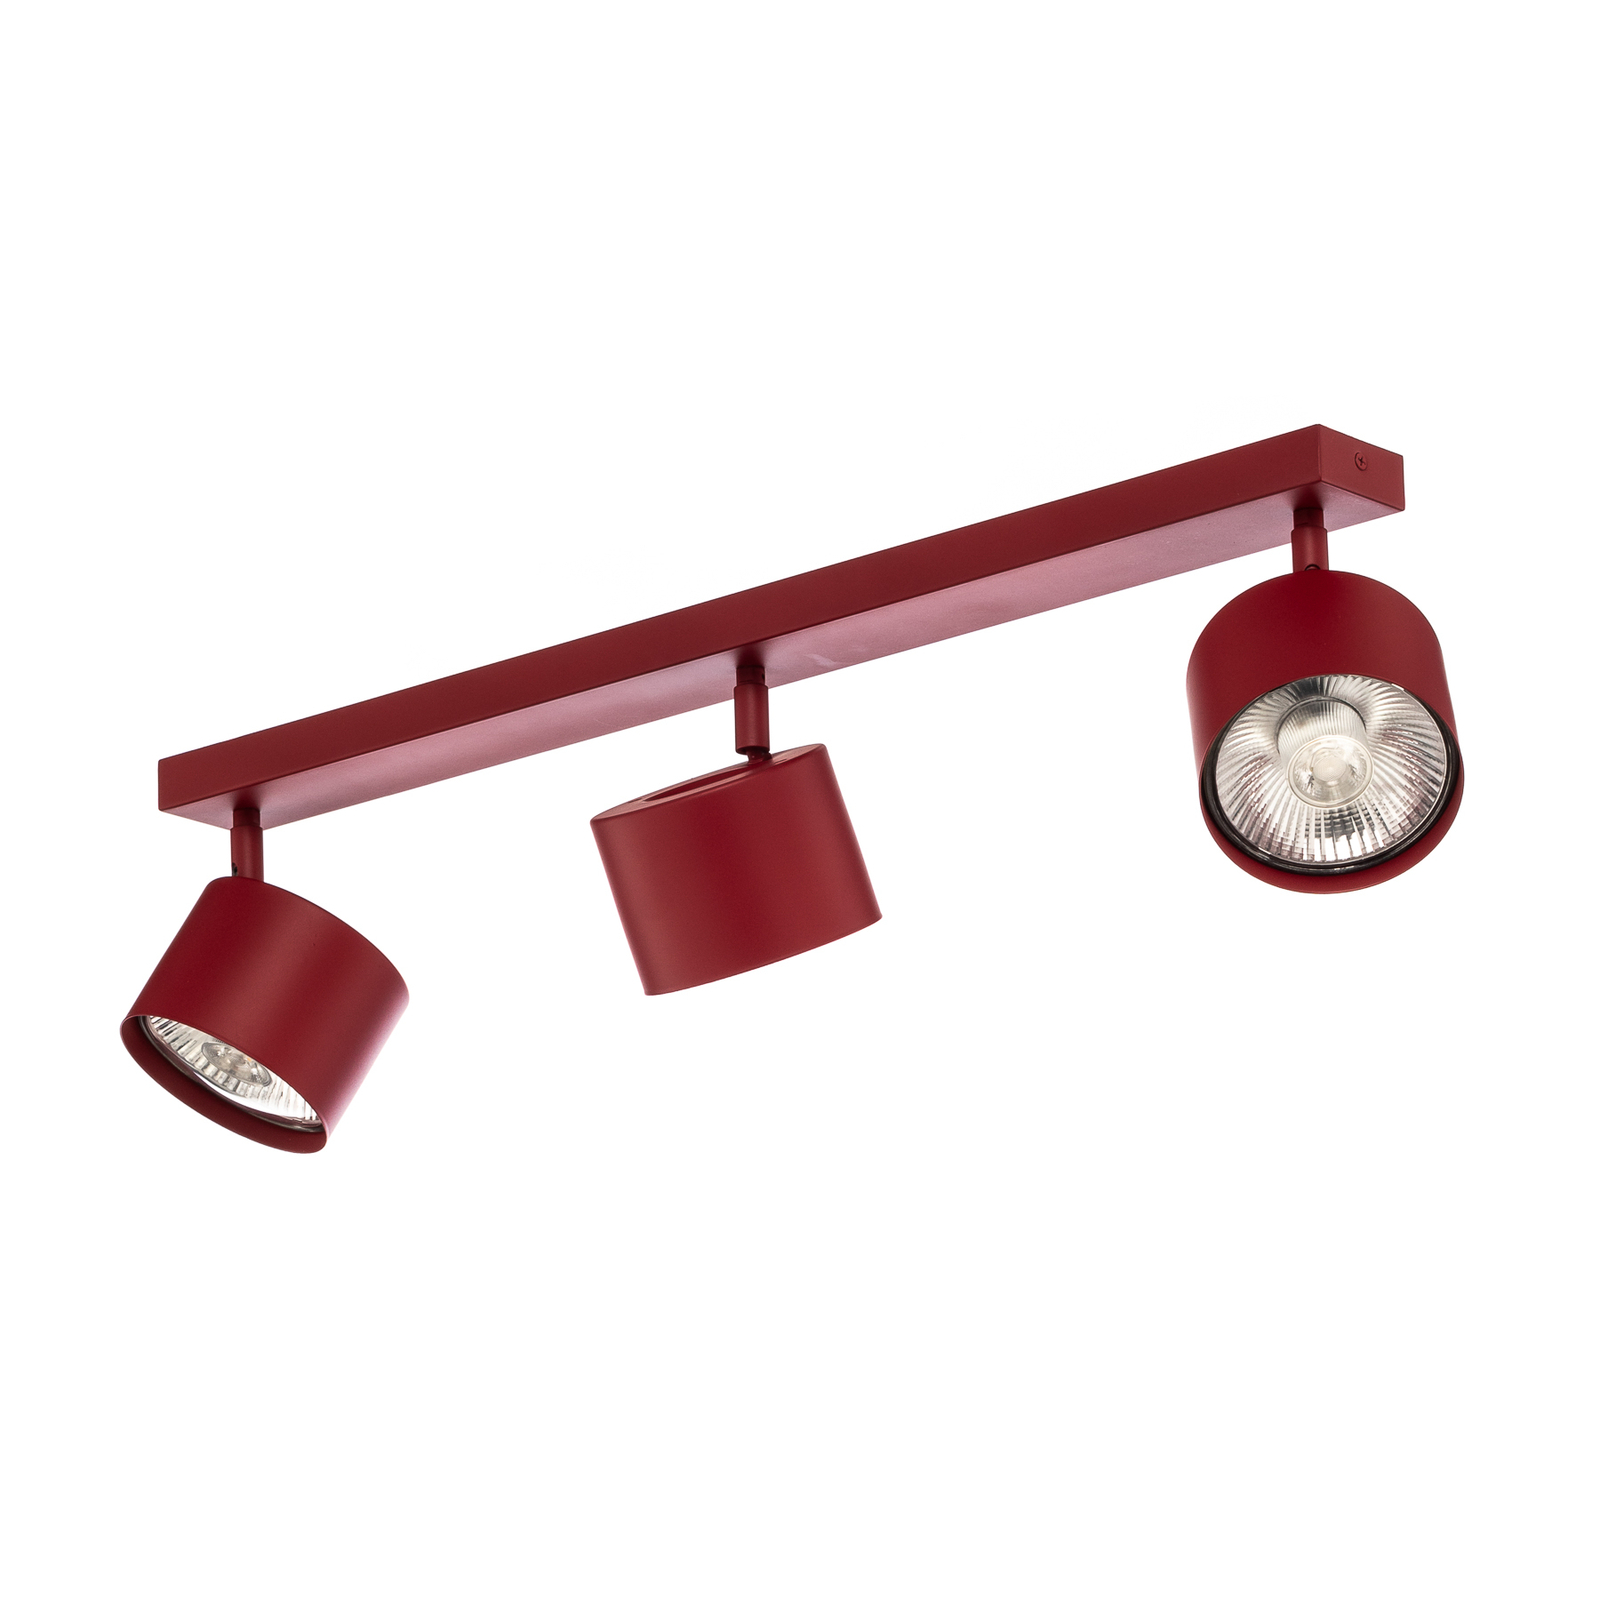 Chloe downlight adjustable 3-bulb, red